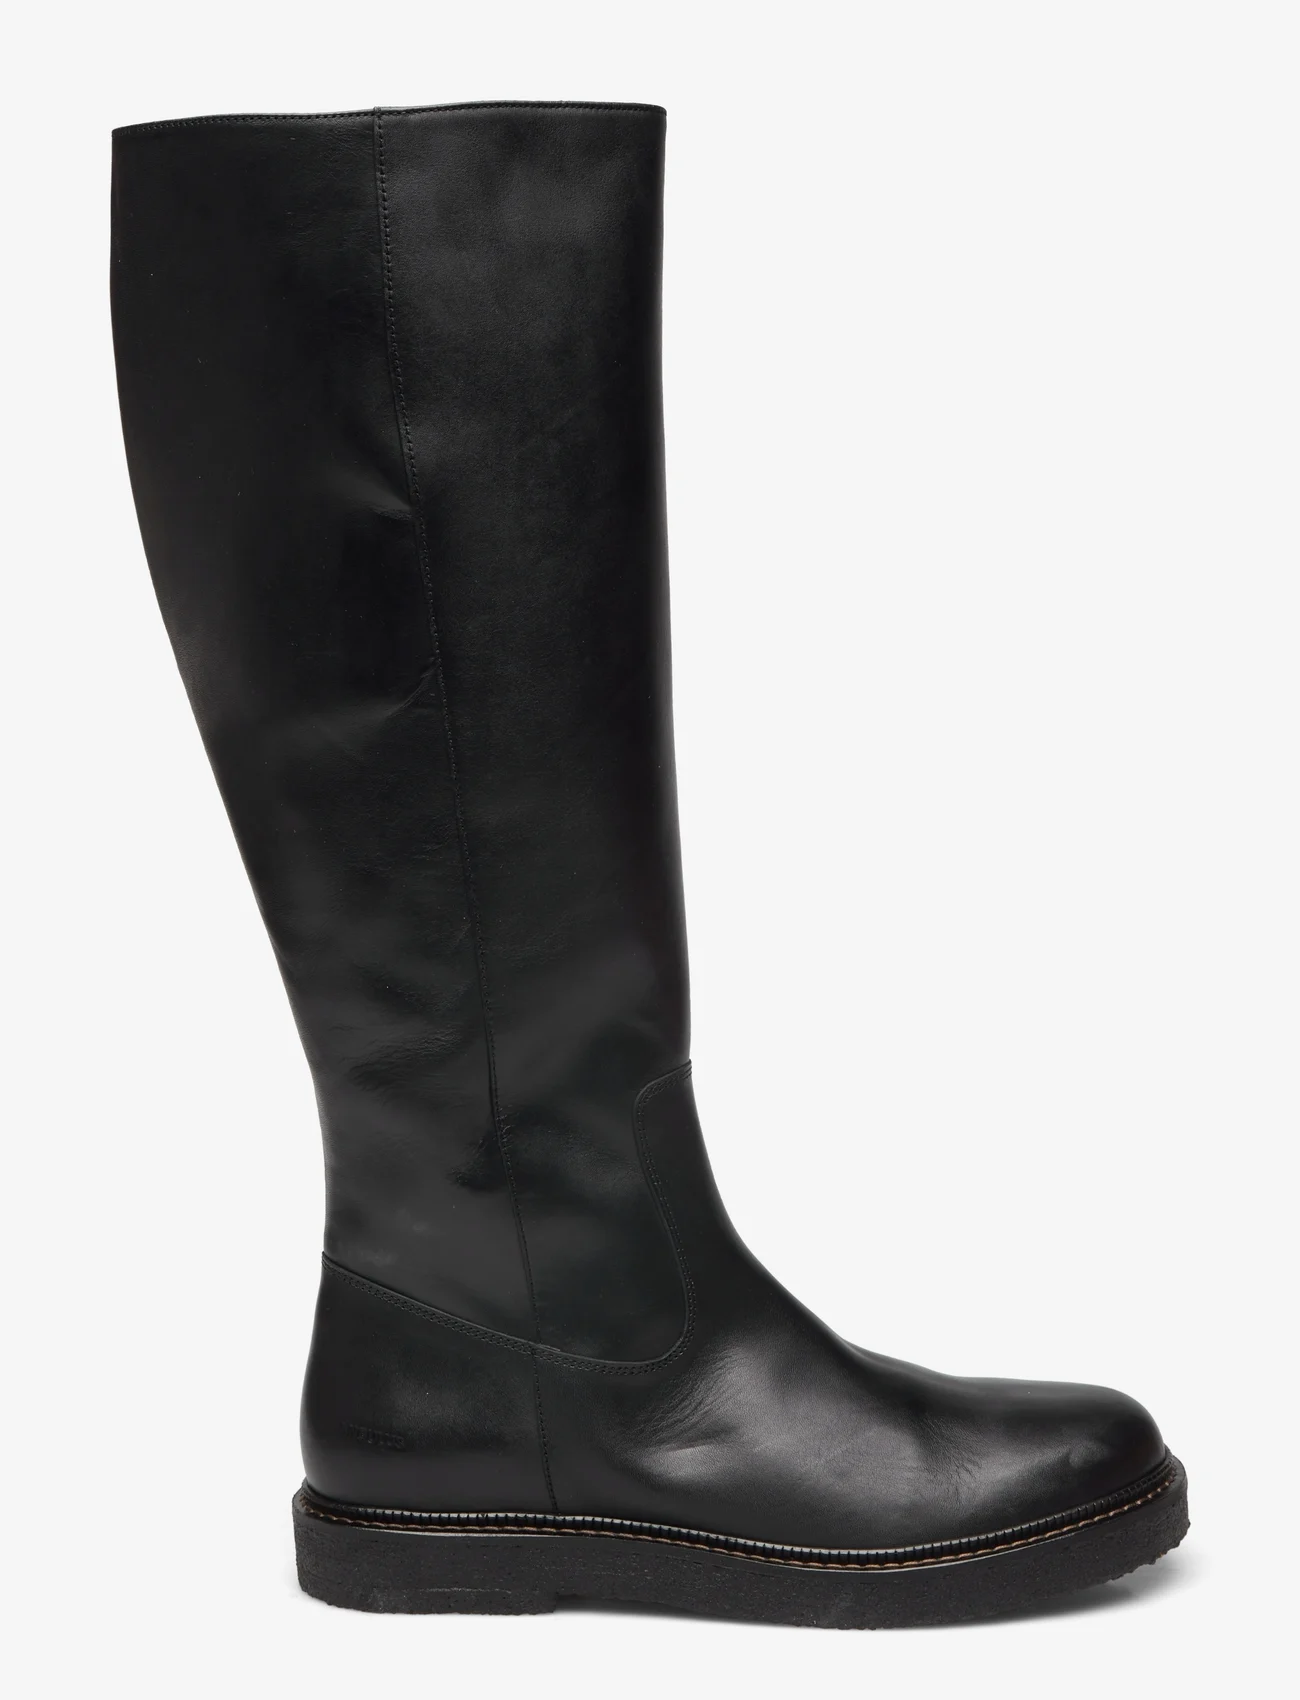 ANGULUS - Boots - flat - lange stiefel - 1604/001 black/black - 1